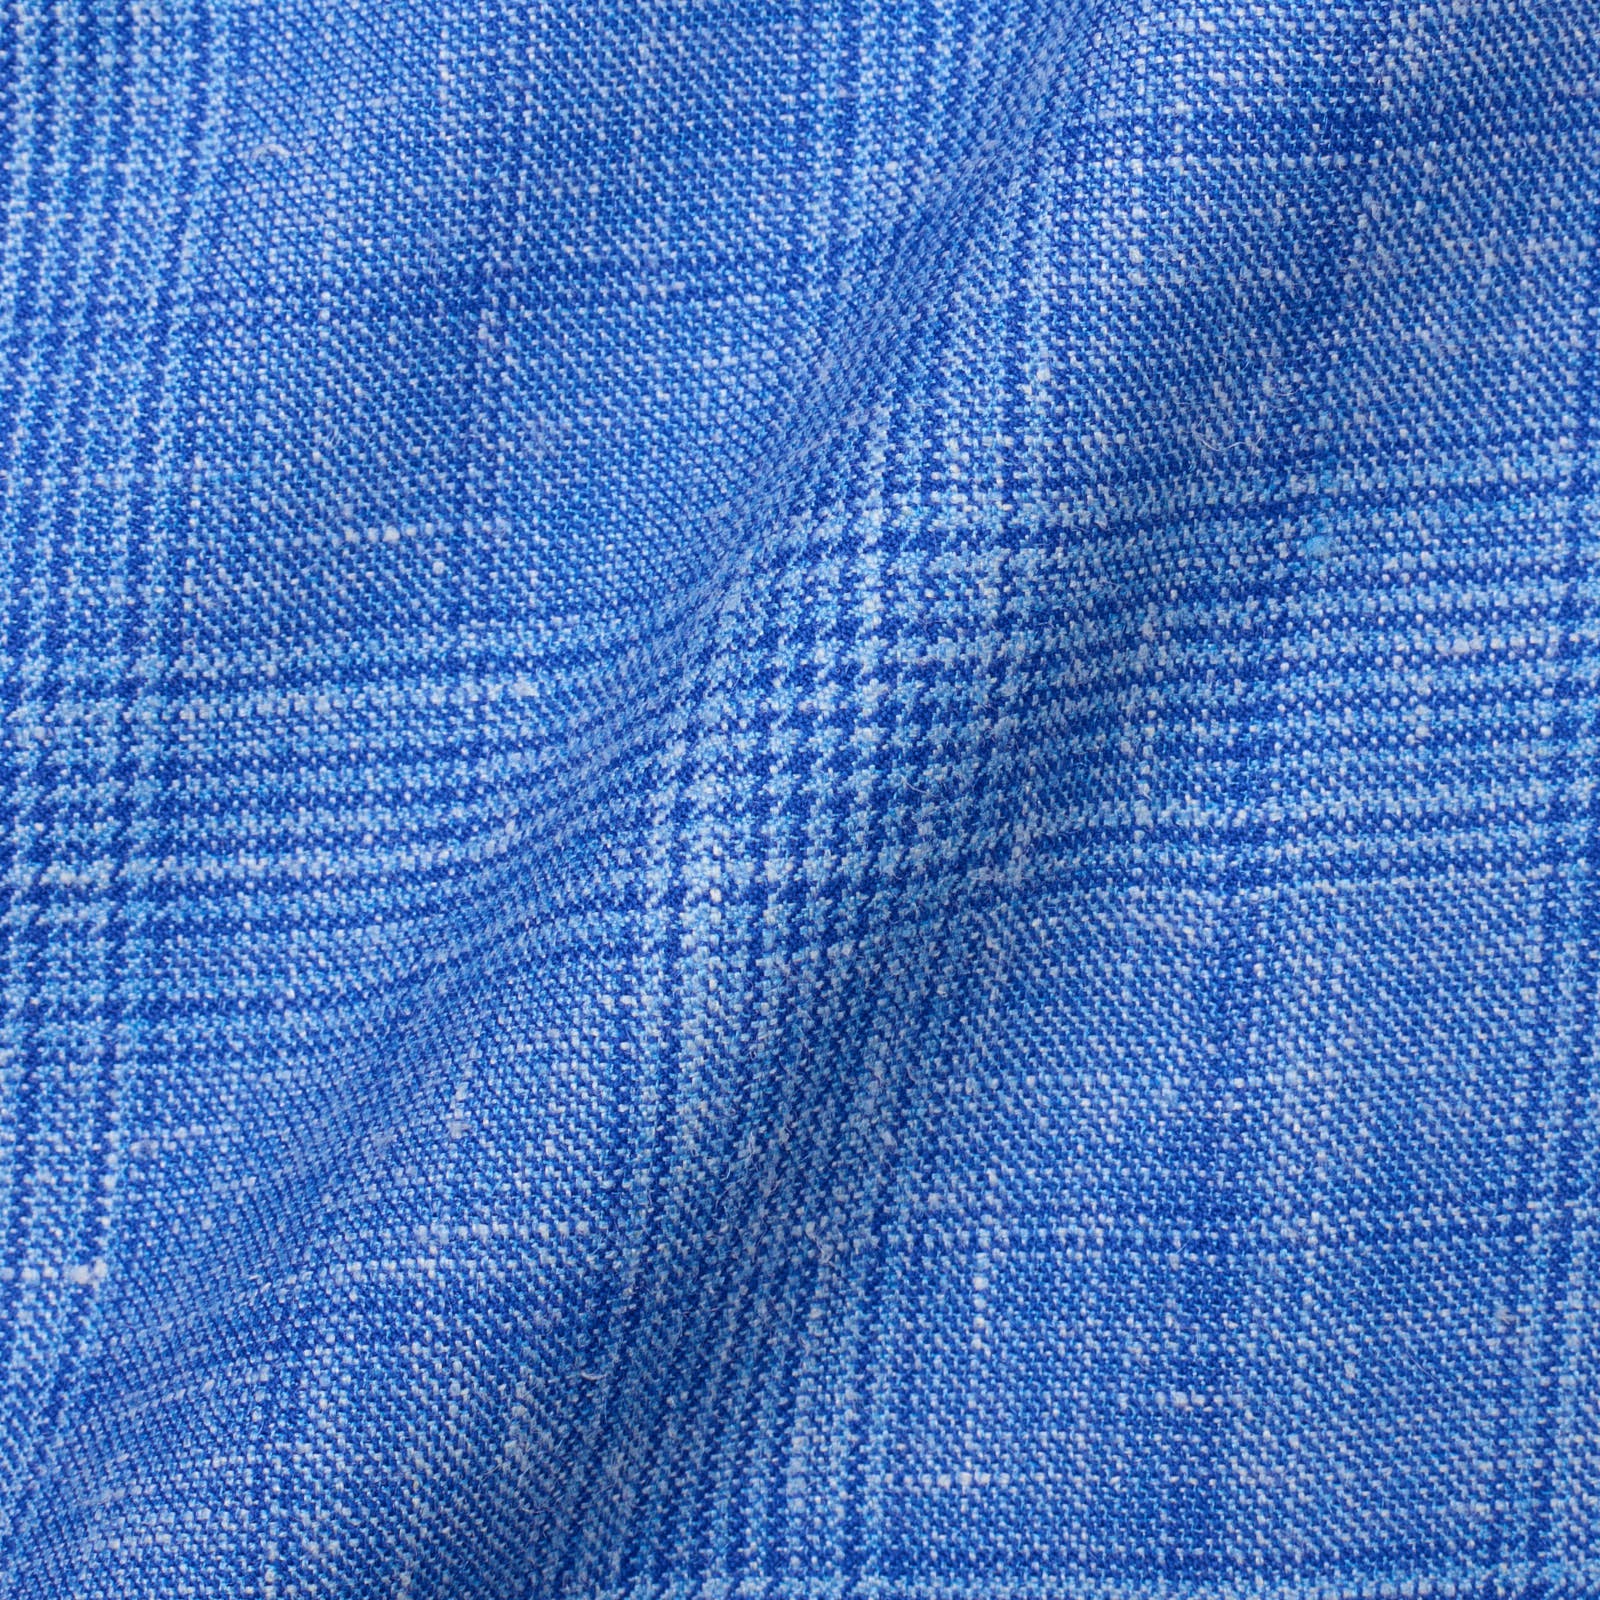 MAURO BLASI for VANNUCCI Handmade Blue Wool Handmade Jacket EU 48 NEW US 38